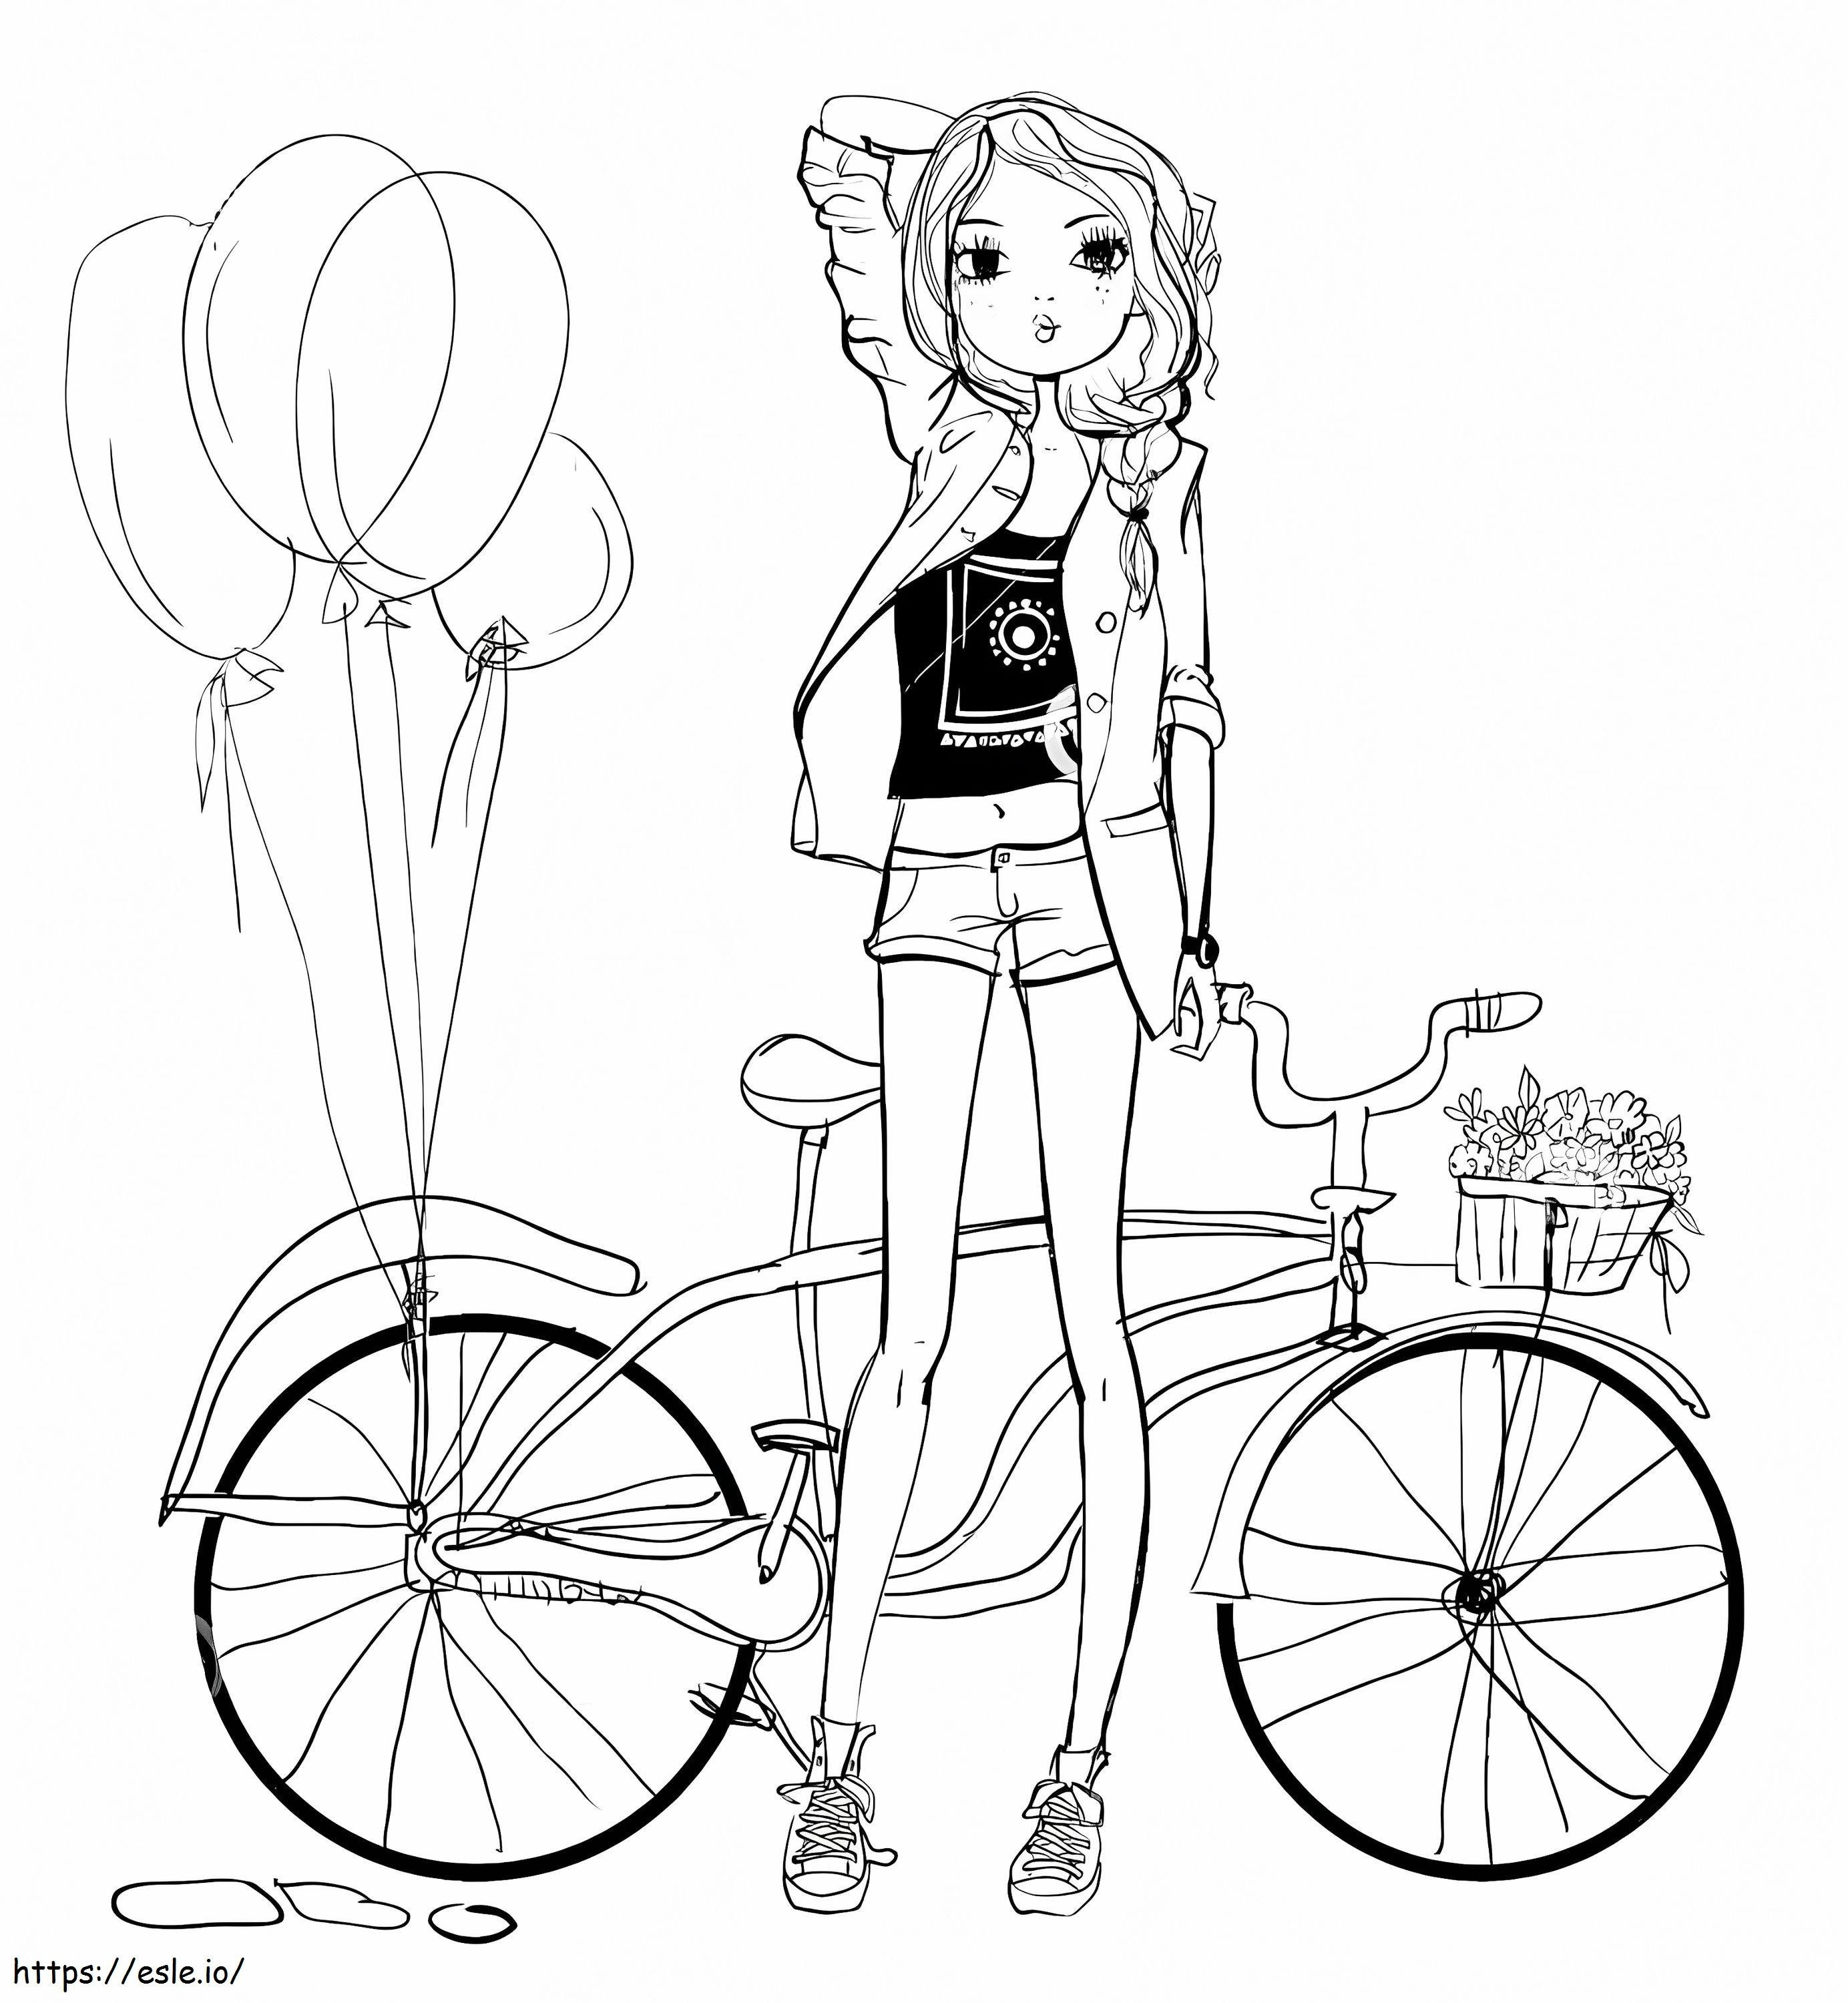 Desenho de menina e bicicleta para colorir